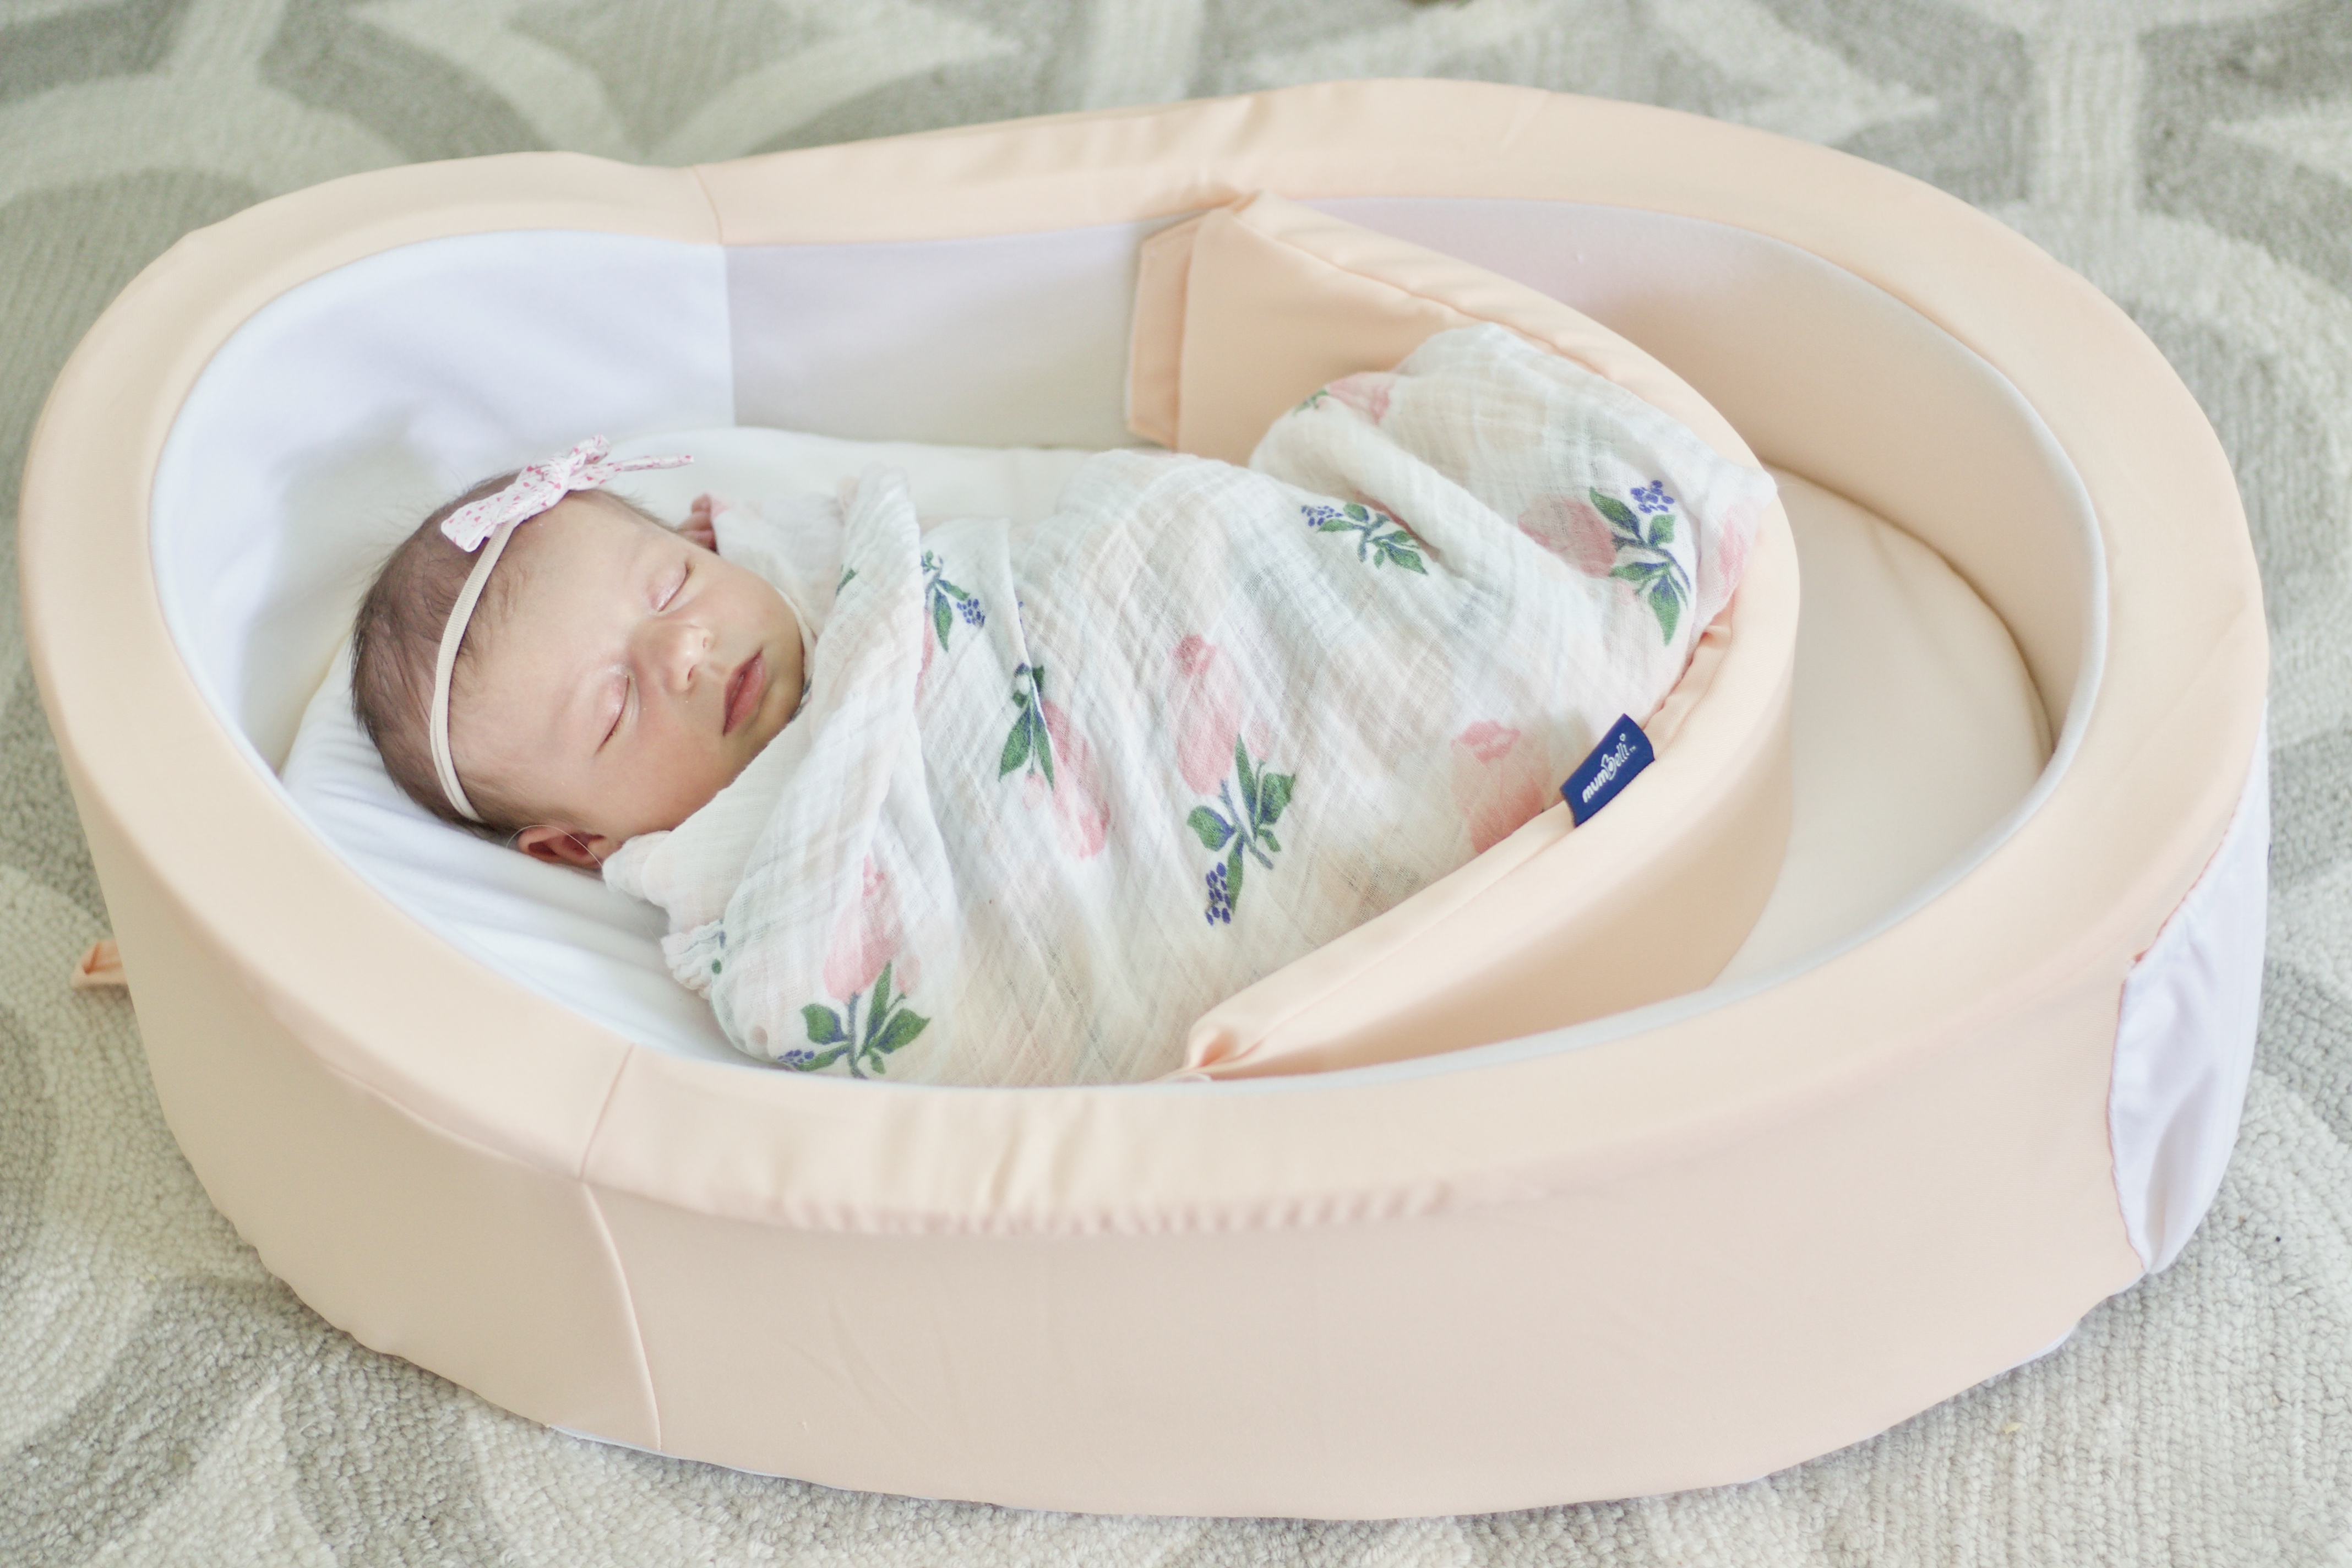 Mumbelli Infant Bed Review: Bassinet 